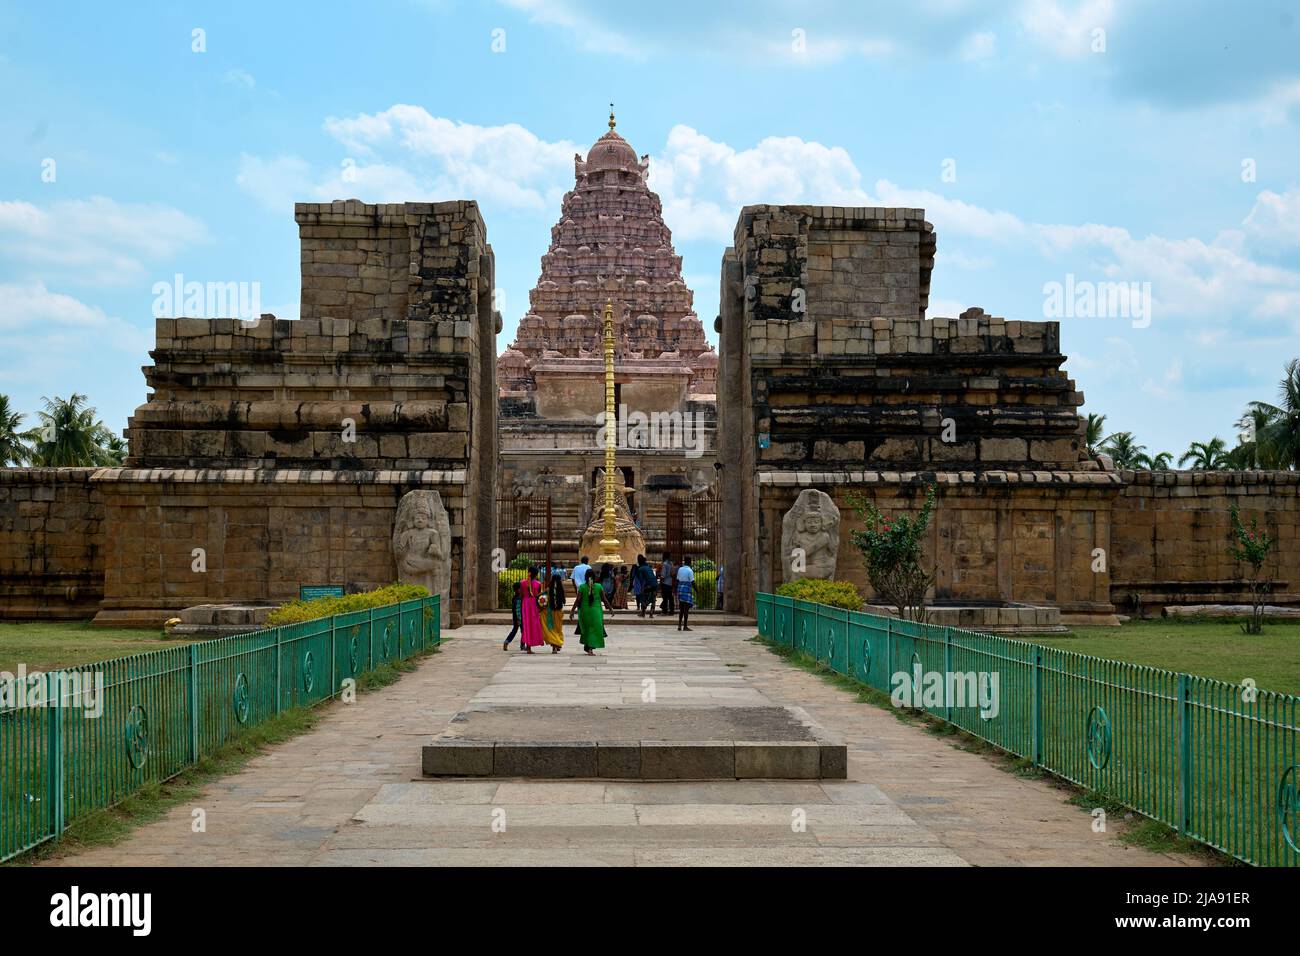 Indian Temple. Great Hindu architecture in Gangaikonda Chola Puram temple, South India. Stock Photo